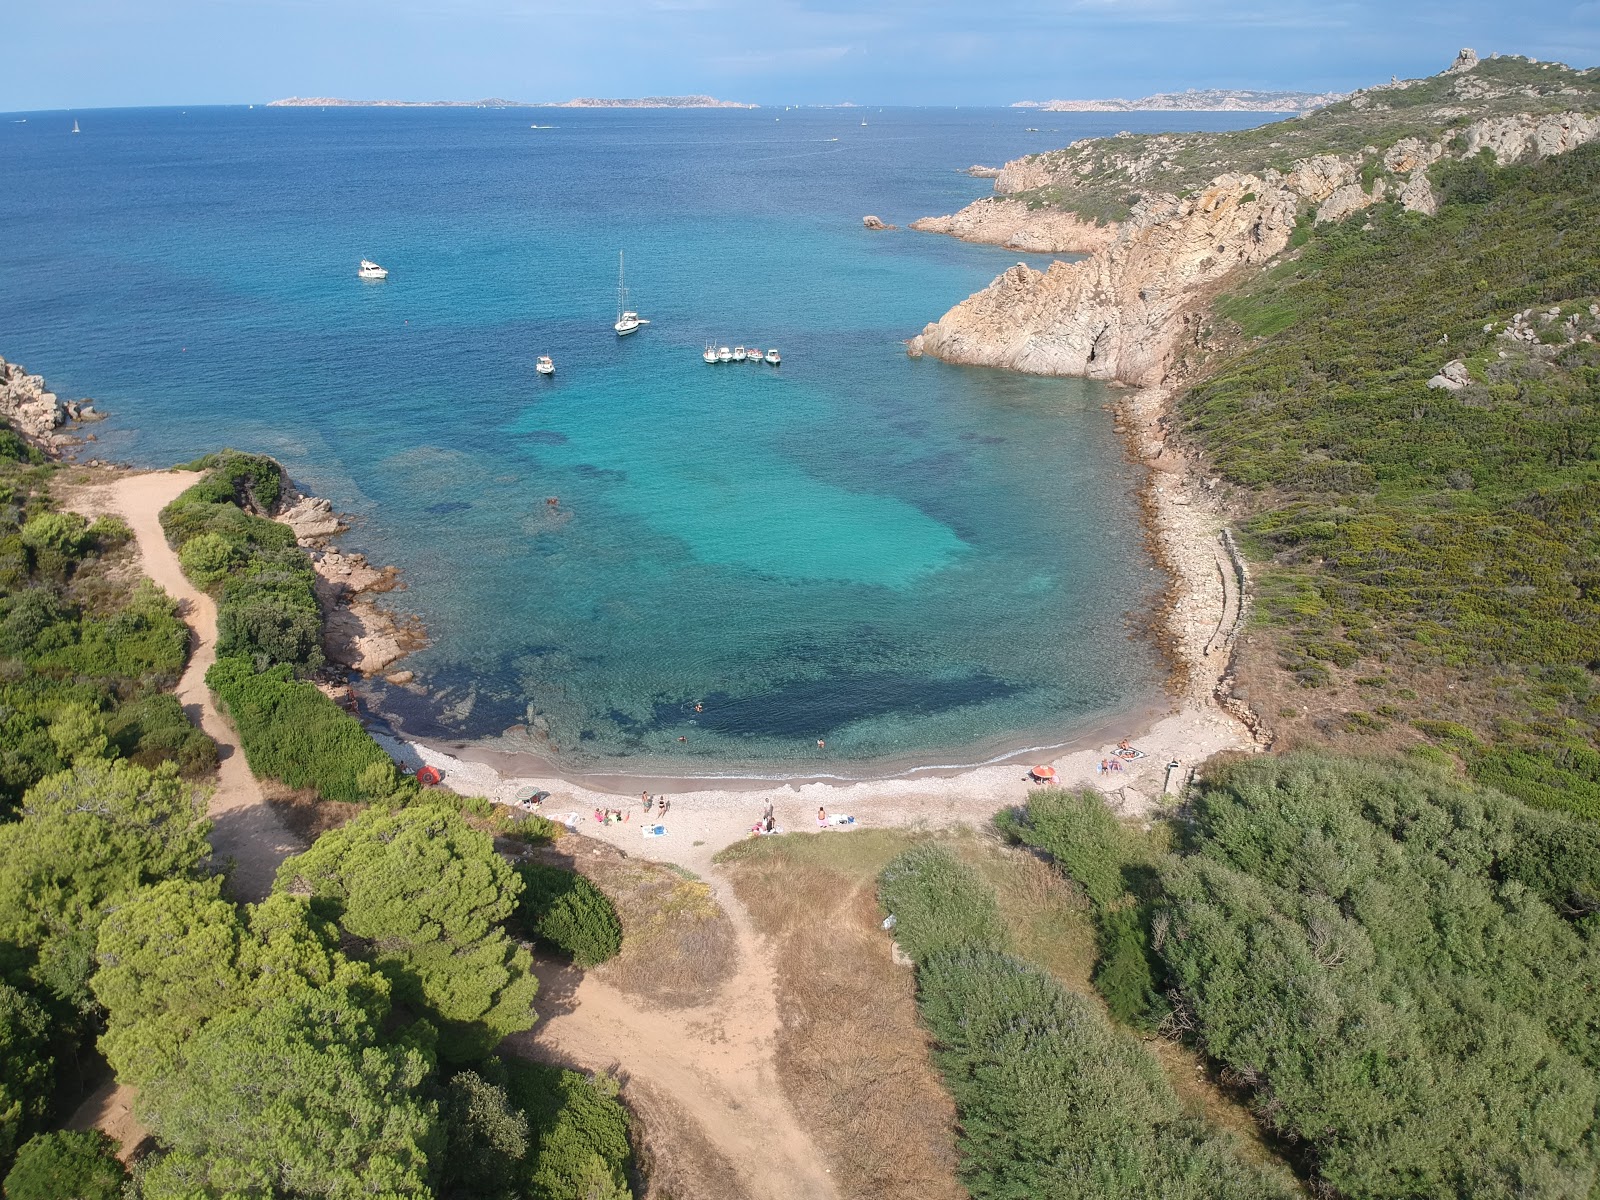 Photo of Spiaggia Cala Sambuco with brown sand surface